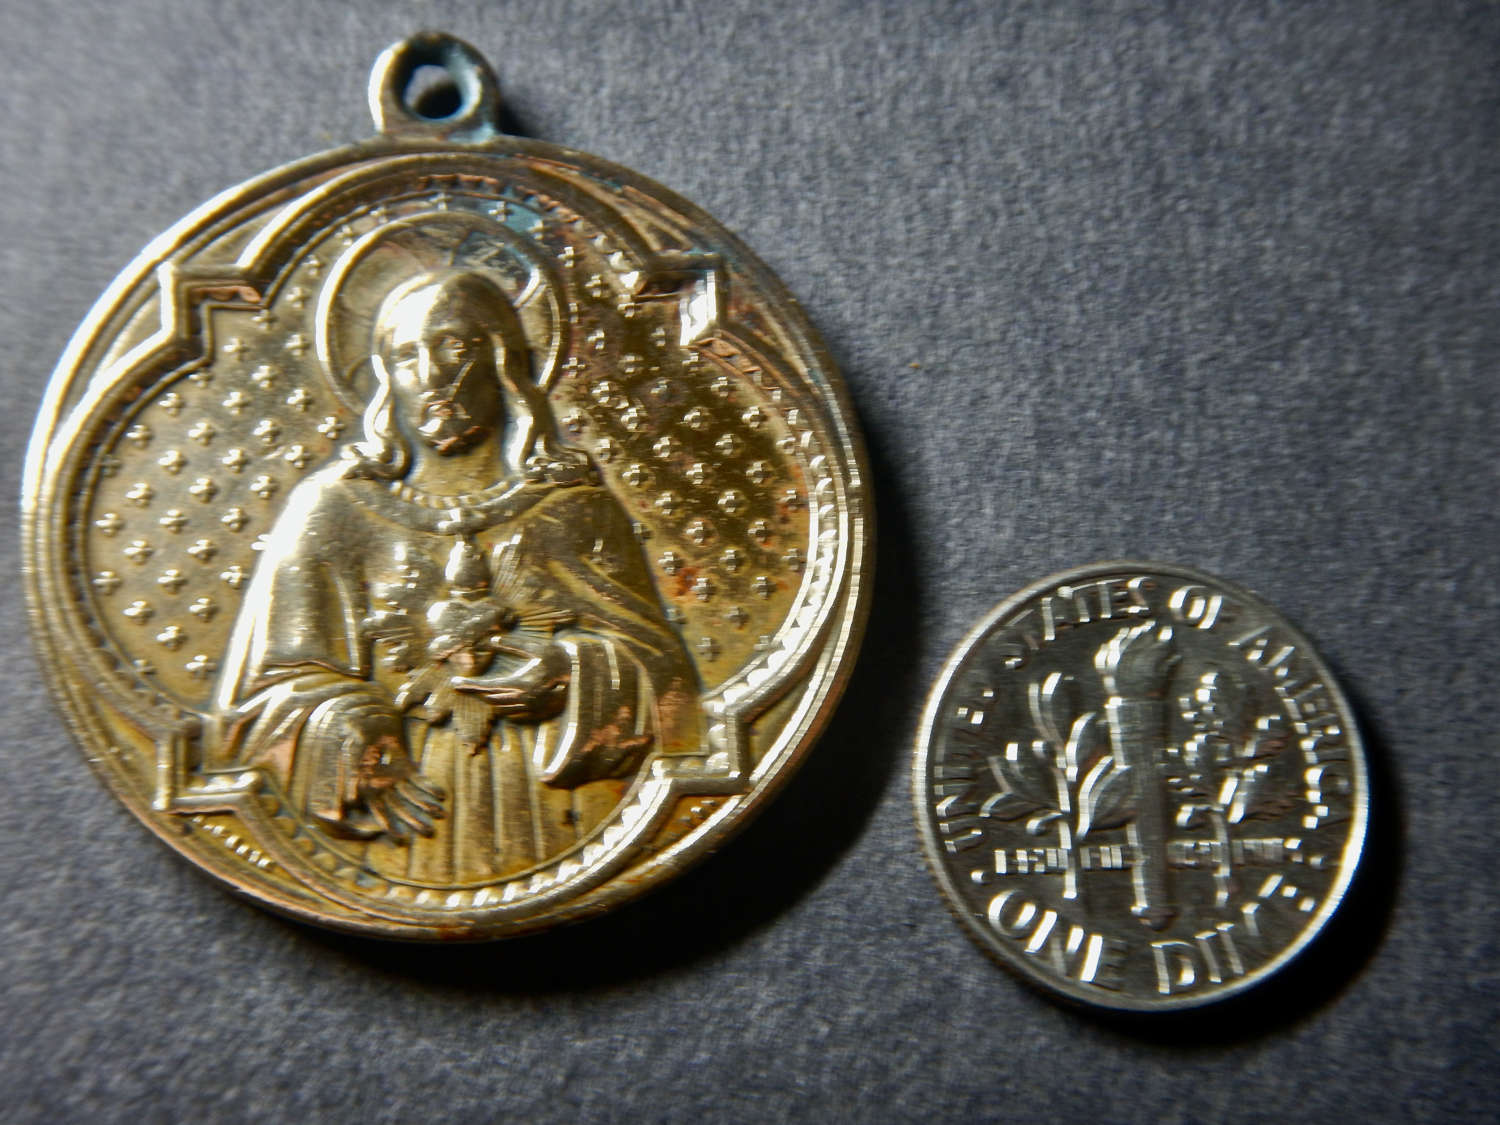 RARE Mid 1800's Bronze Medallion - ANTIQUE - The Sacred Heart of Jesus